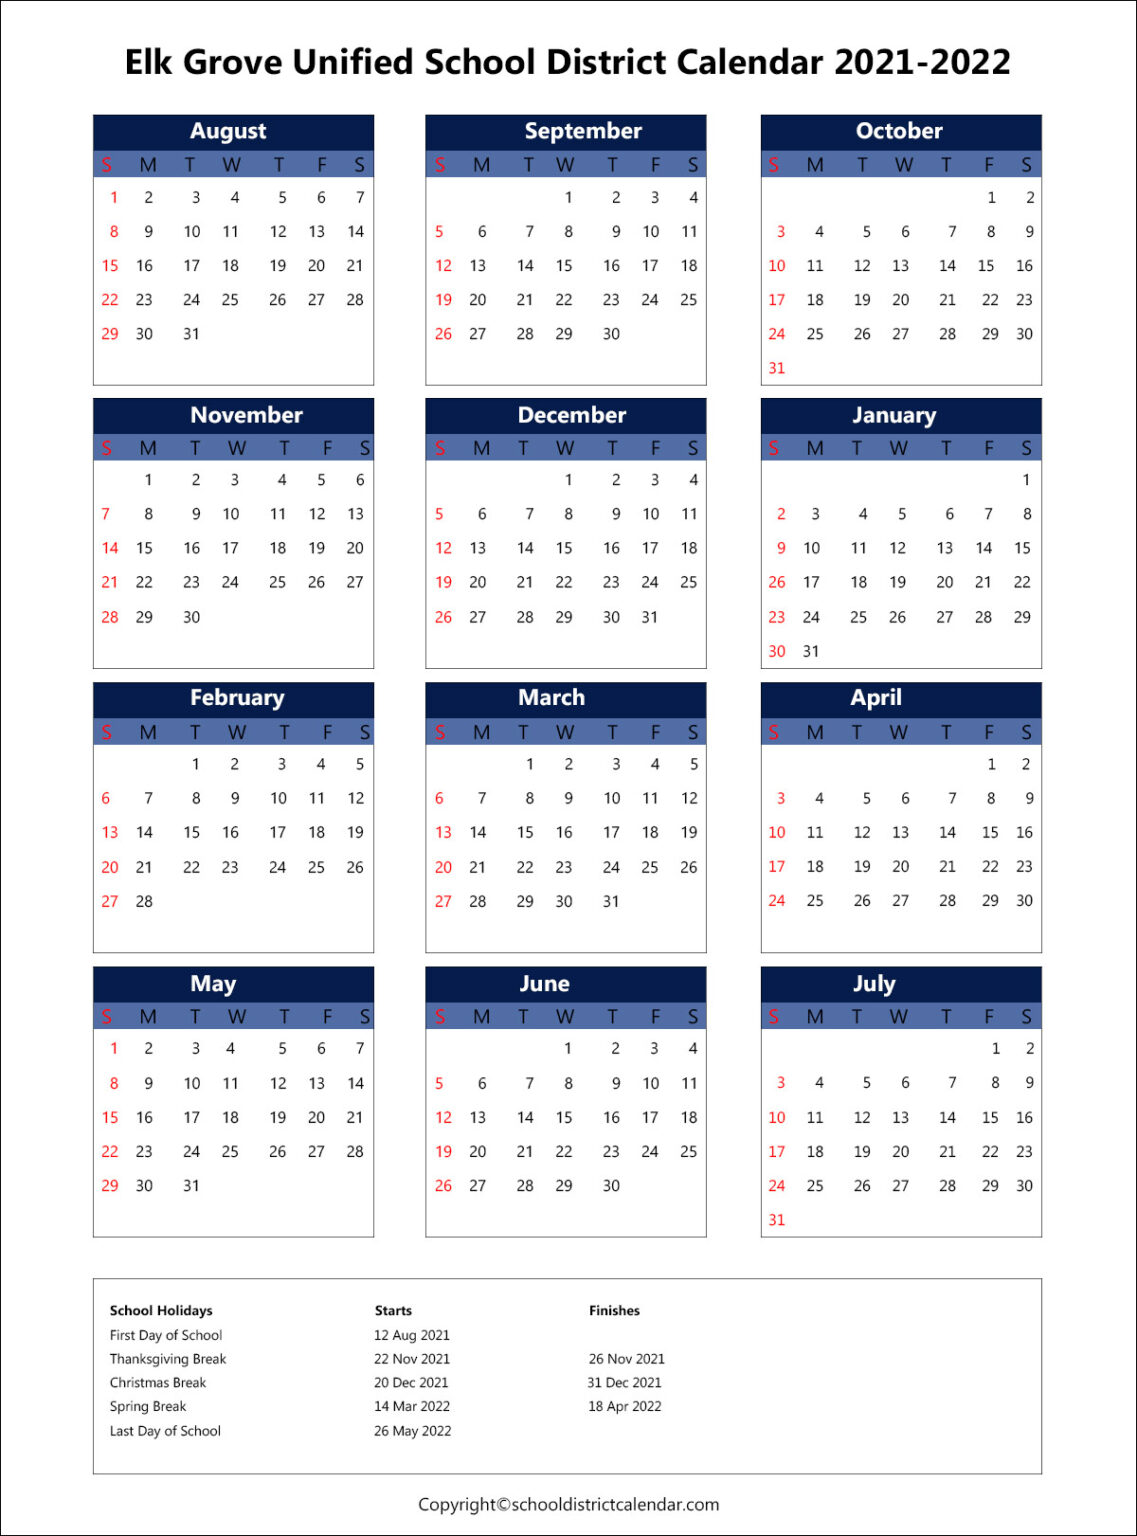 Elk Grove Unified School District Calendar Holidays 2021-2022